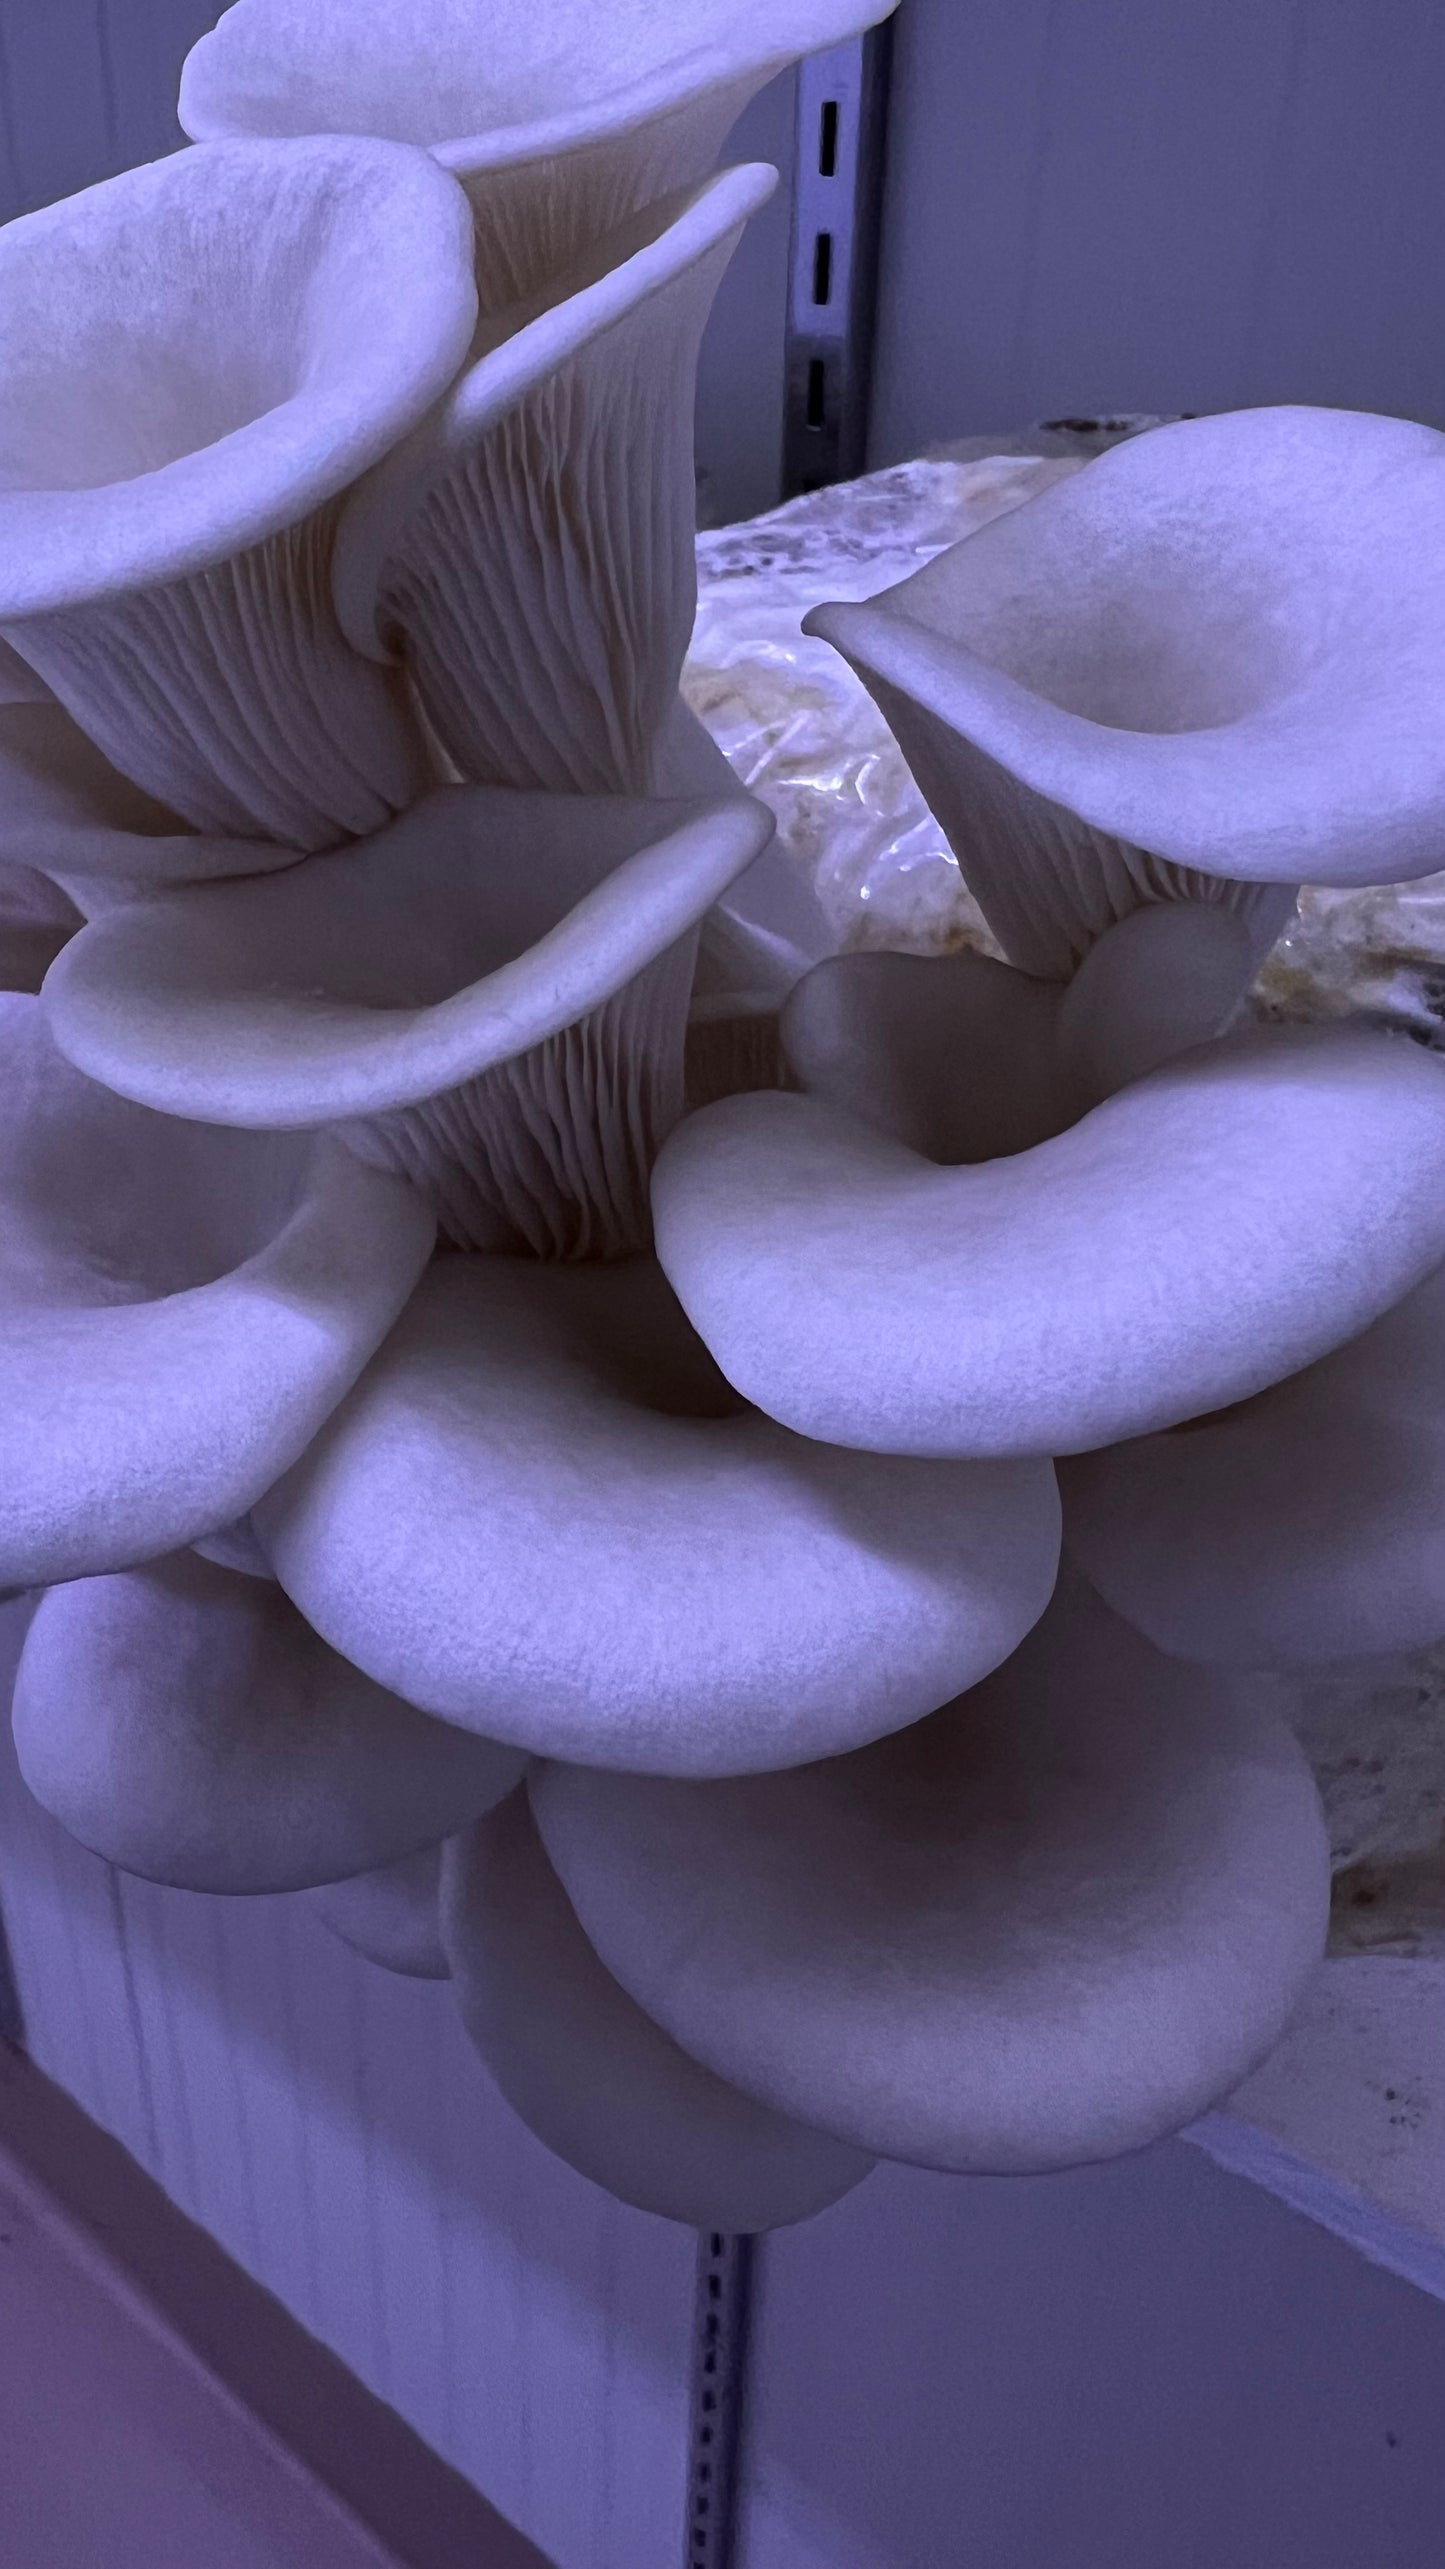 MushPellets™ Improved - Premium mushroom grow medium for Wood loving species